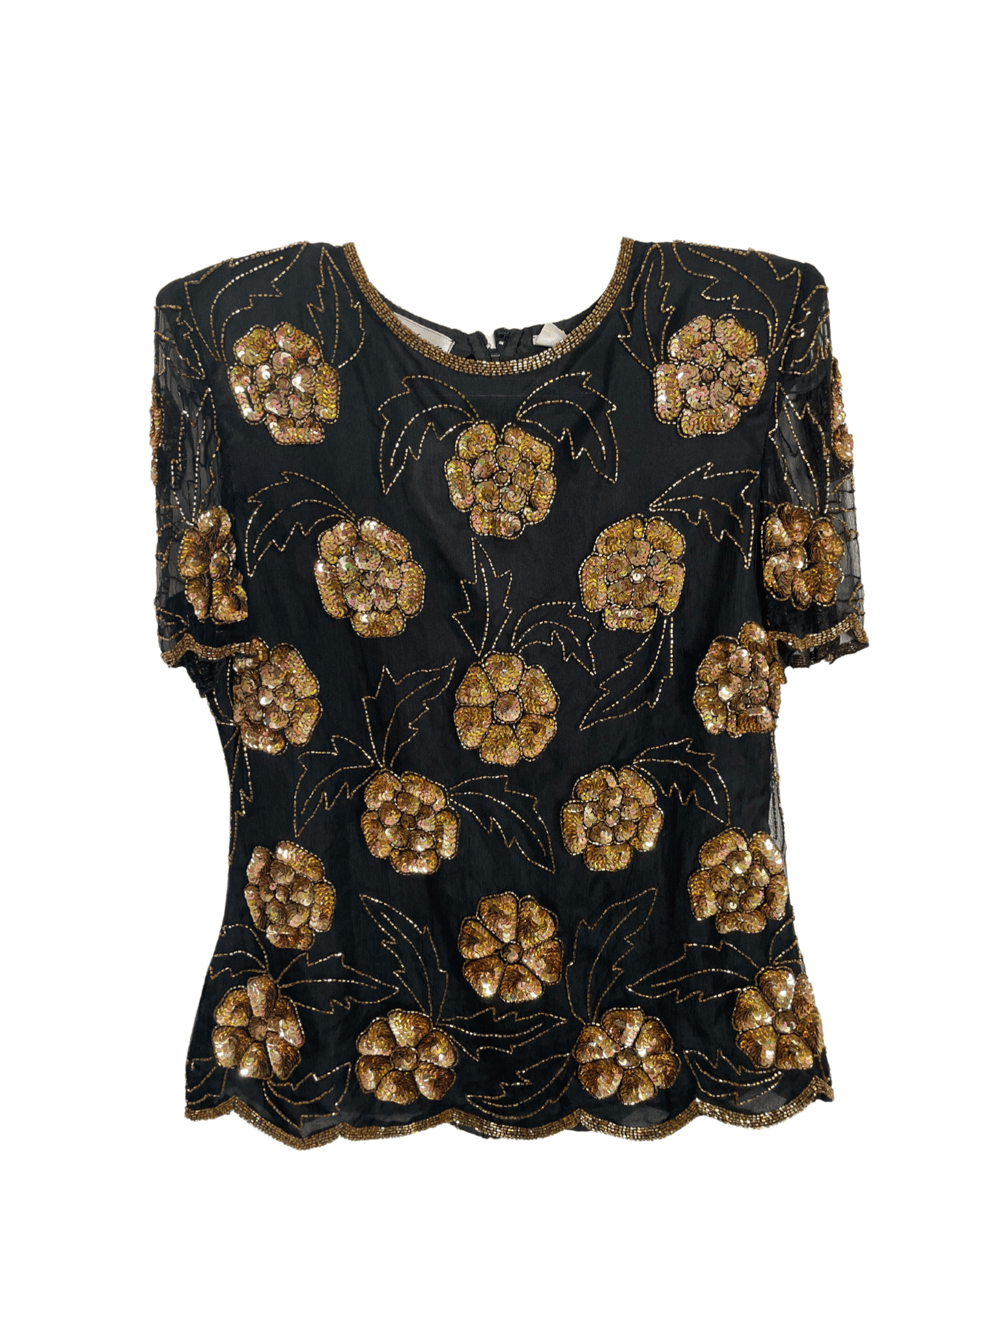 Black & Gold Sequin Floral Blouse